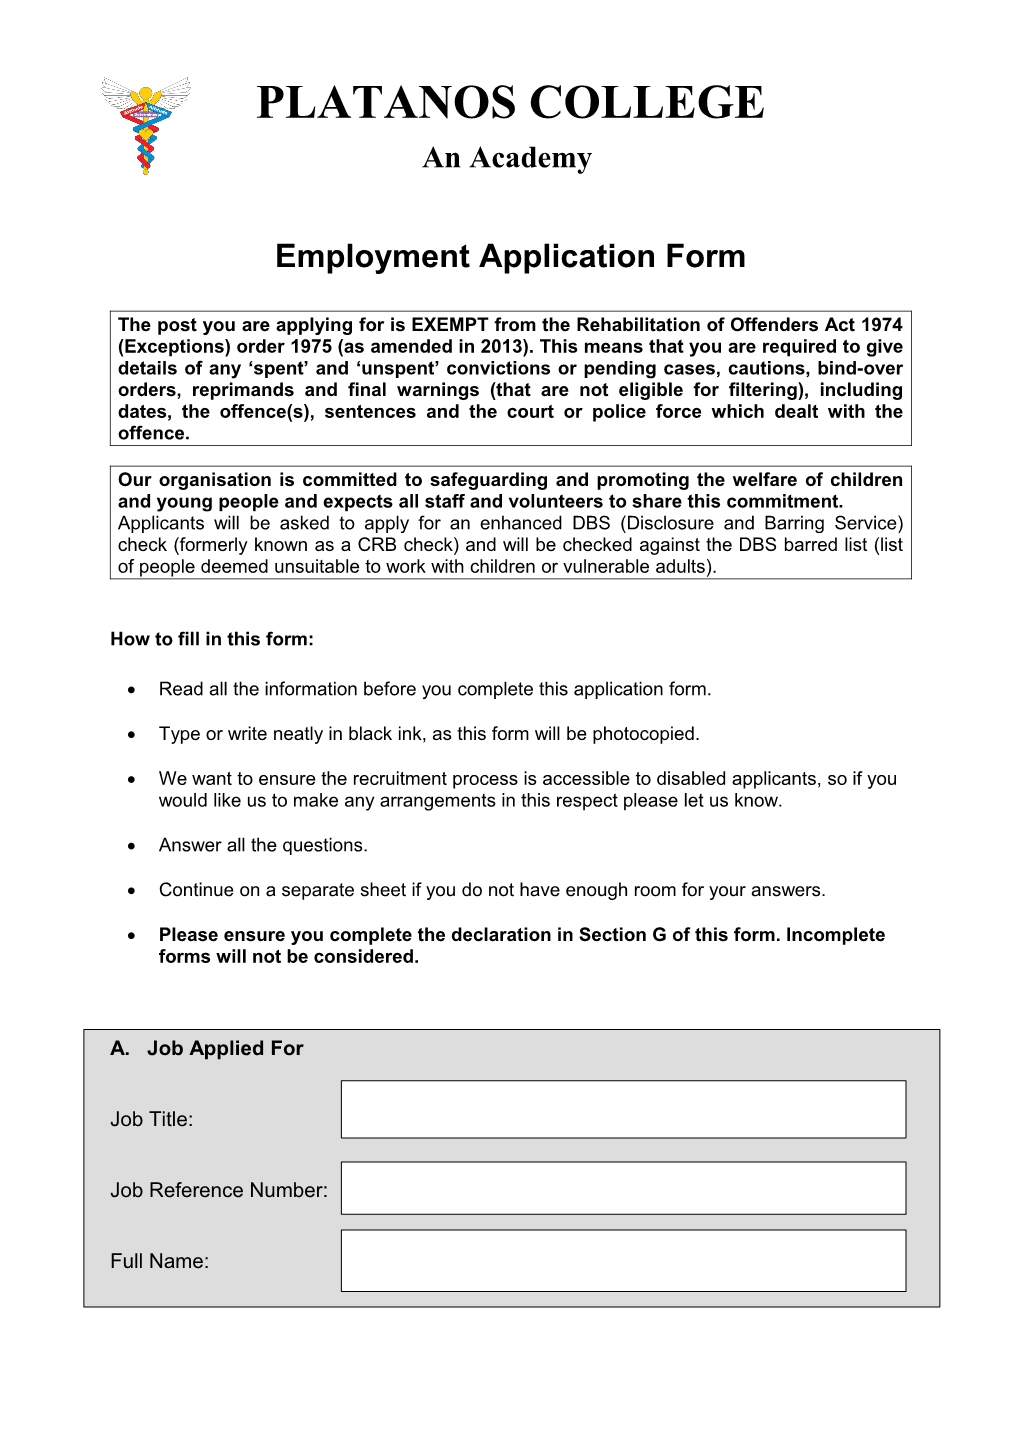 Employment Application Form s6